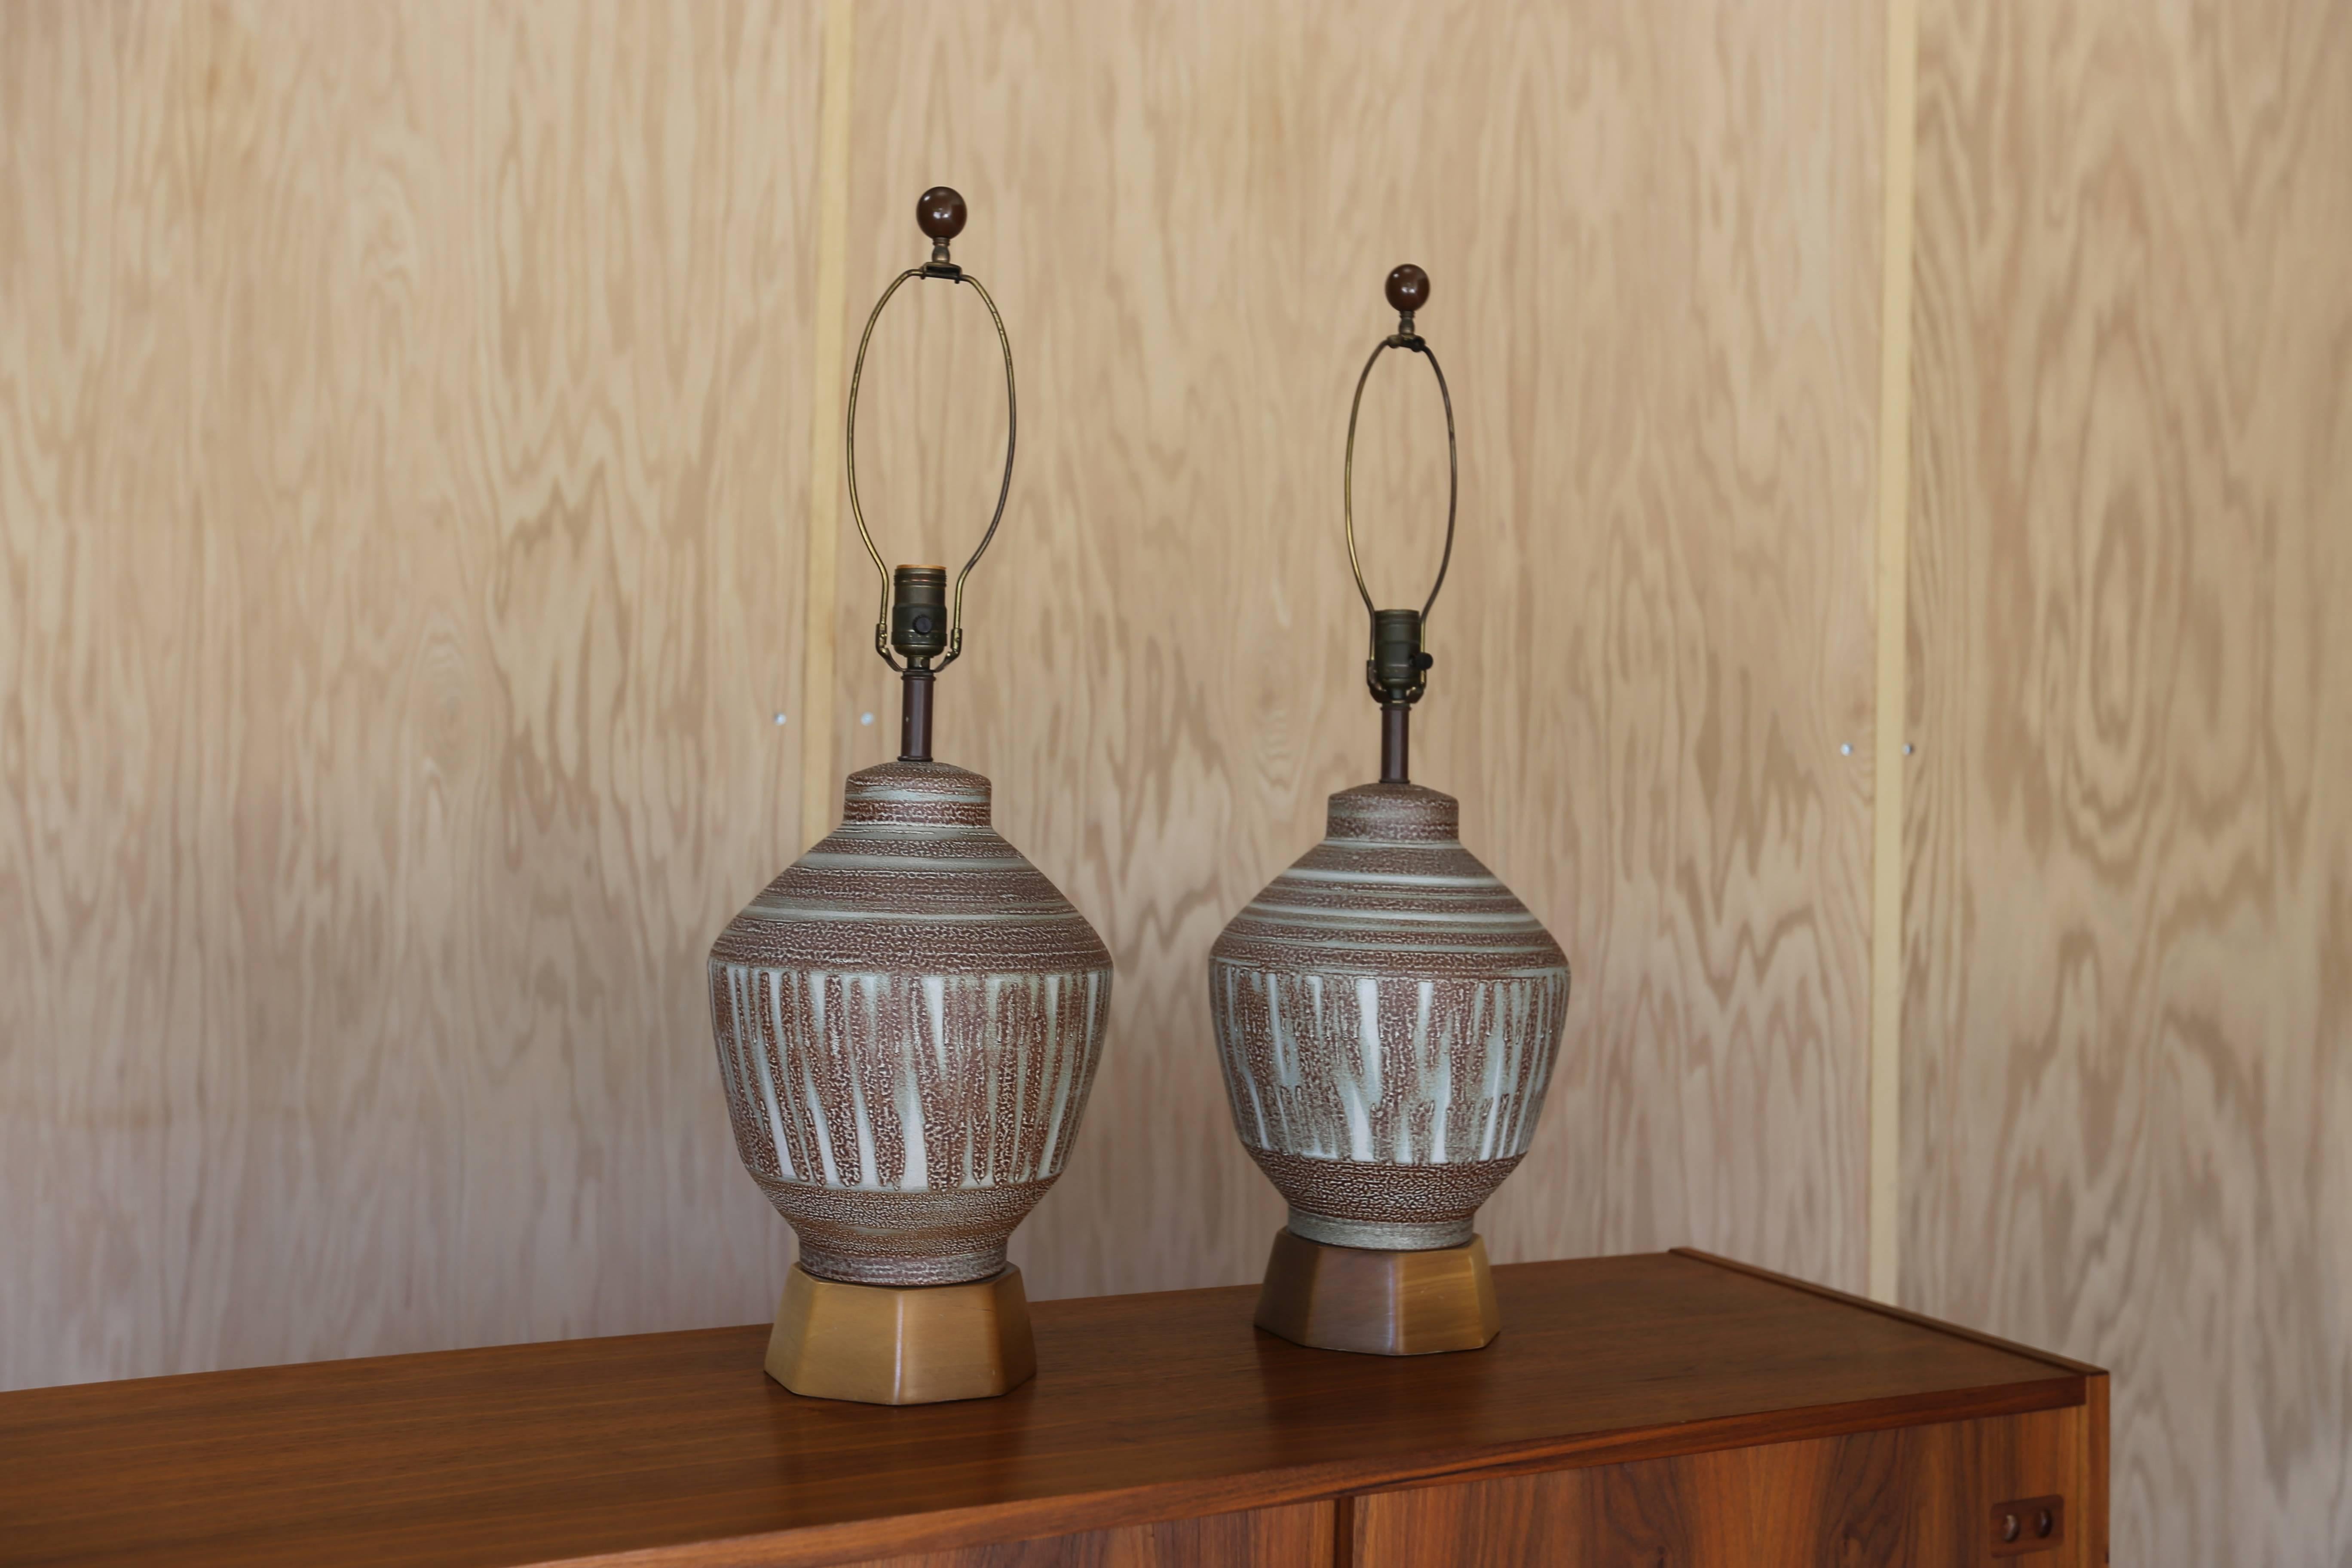 Pair of salt glaze lamps with octagonal wood base.